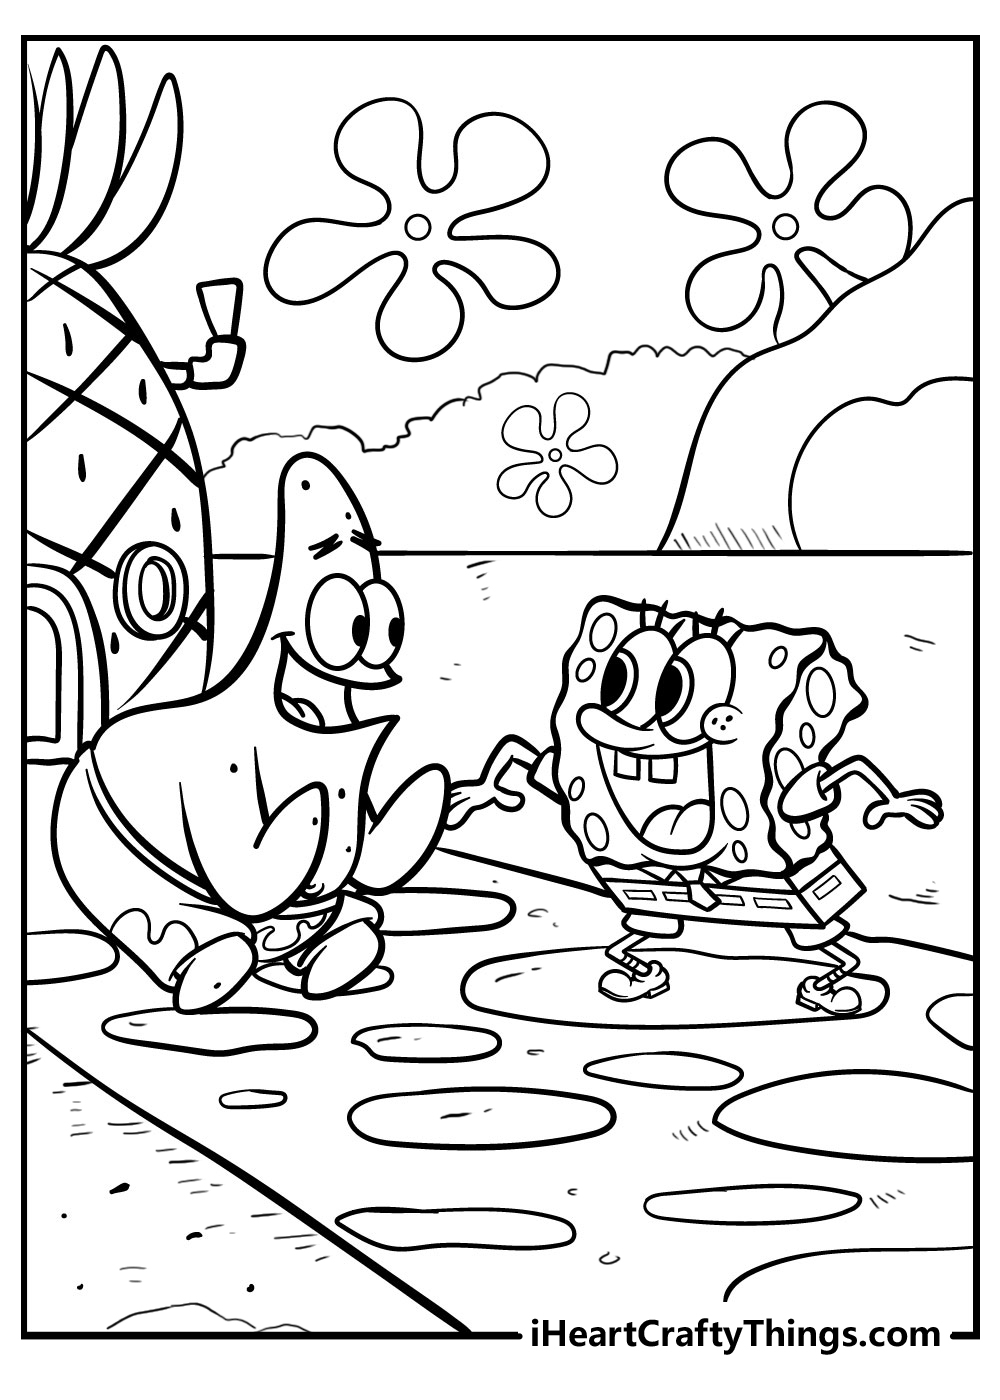 Super Fun Spongebob Coloring Pages Coloring Pages Spongebob Coloring ...